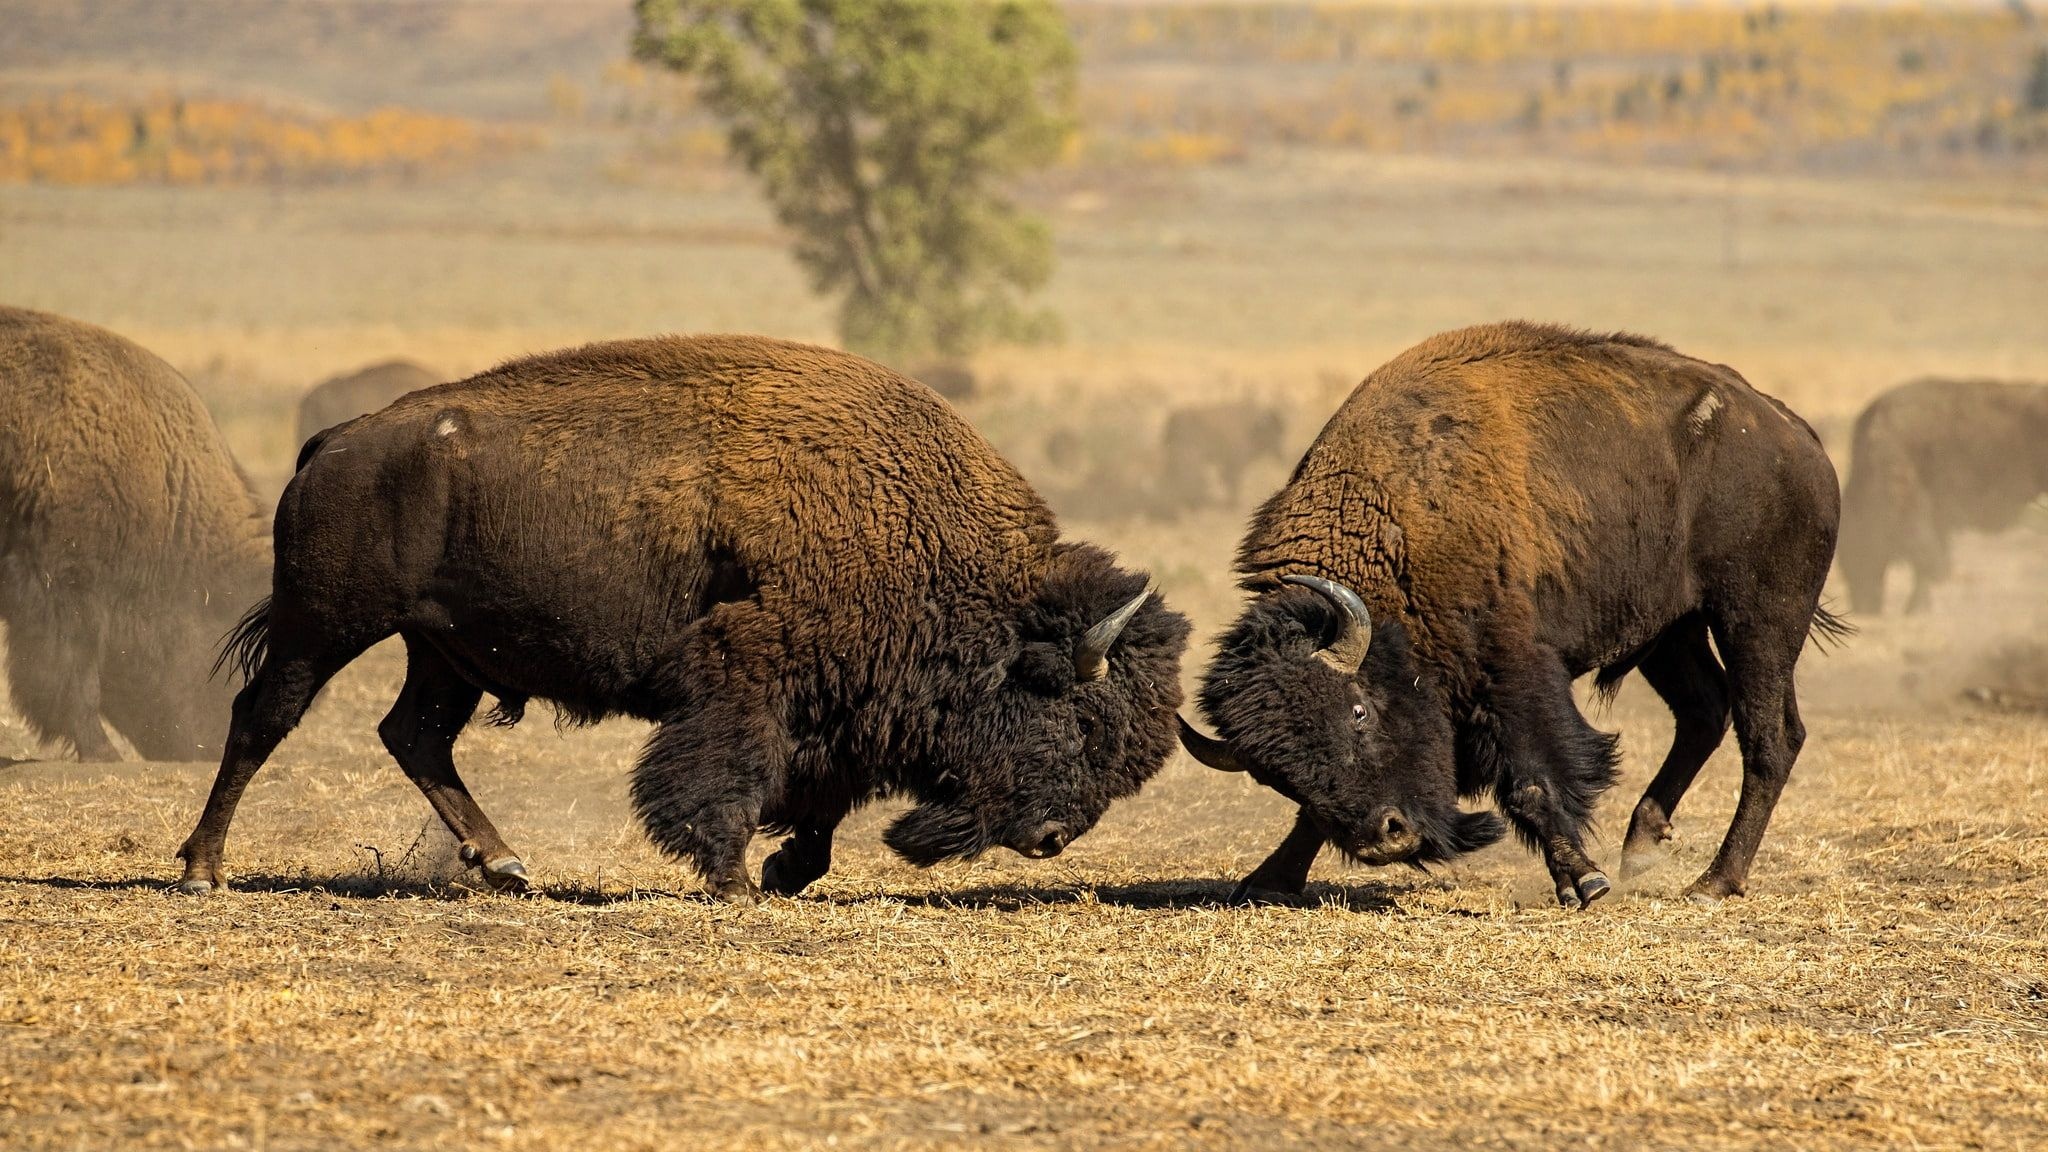 Nature's battle captured, Horned buffalo spectacle, HD wildlife wallpaper, Bison in action, 2050x1160 HD Desktop